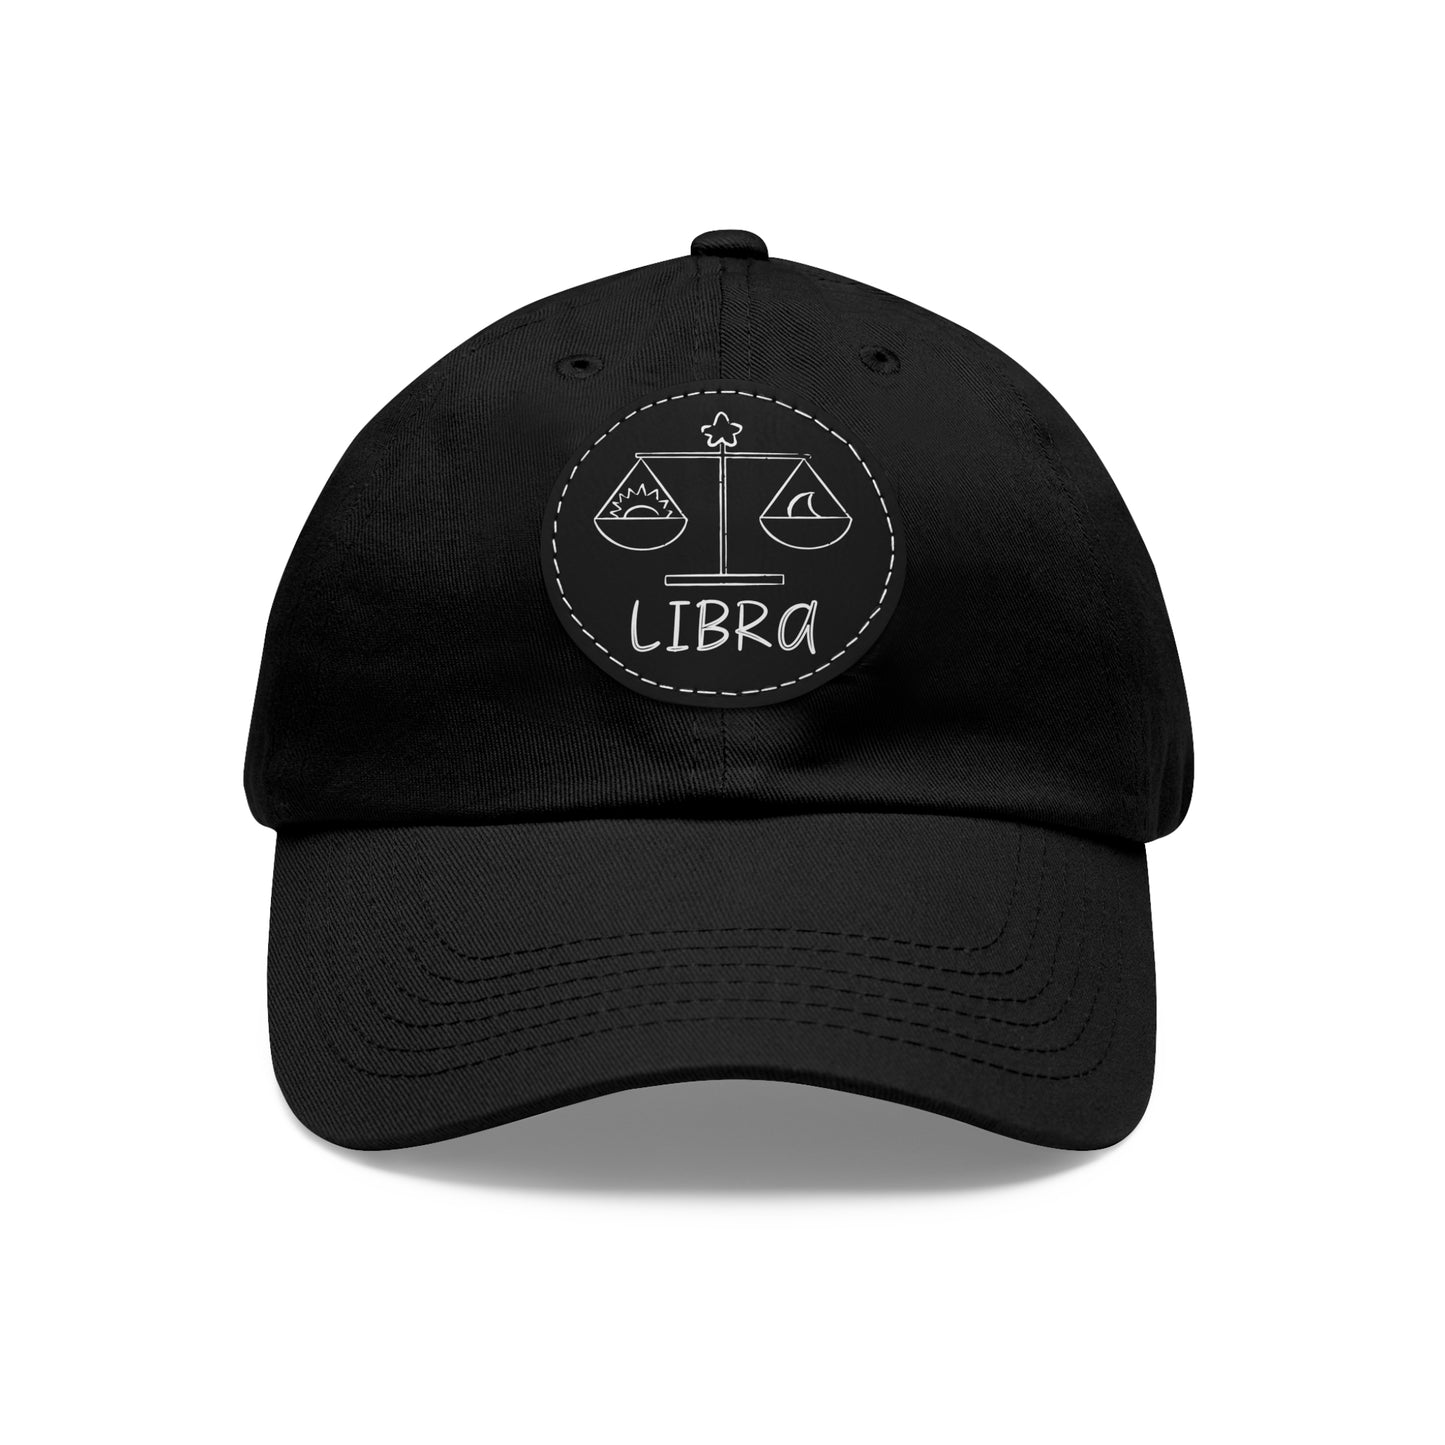 Cute Libra Hat, Vegan Leather Patch